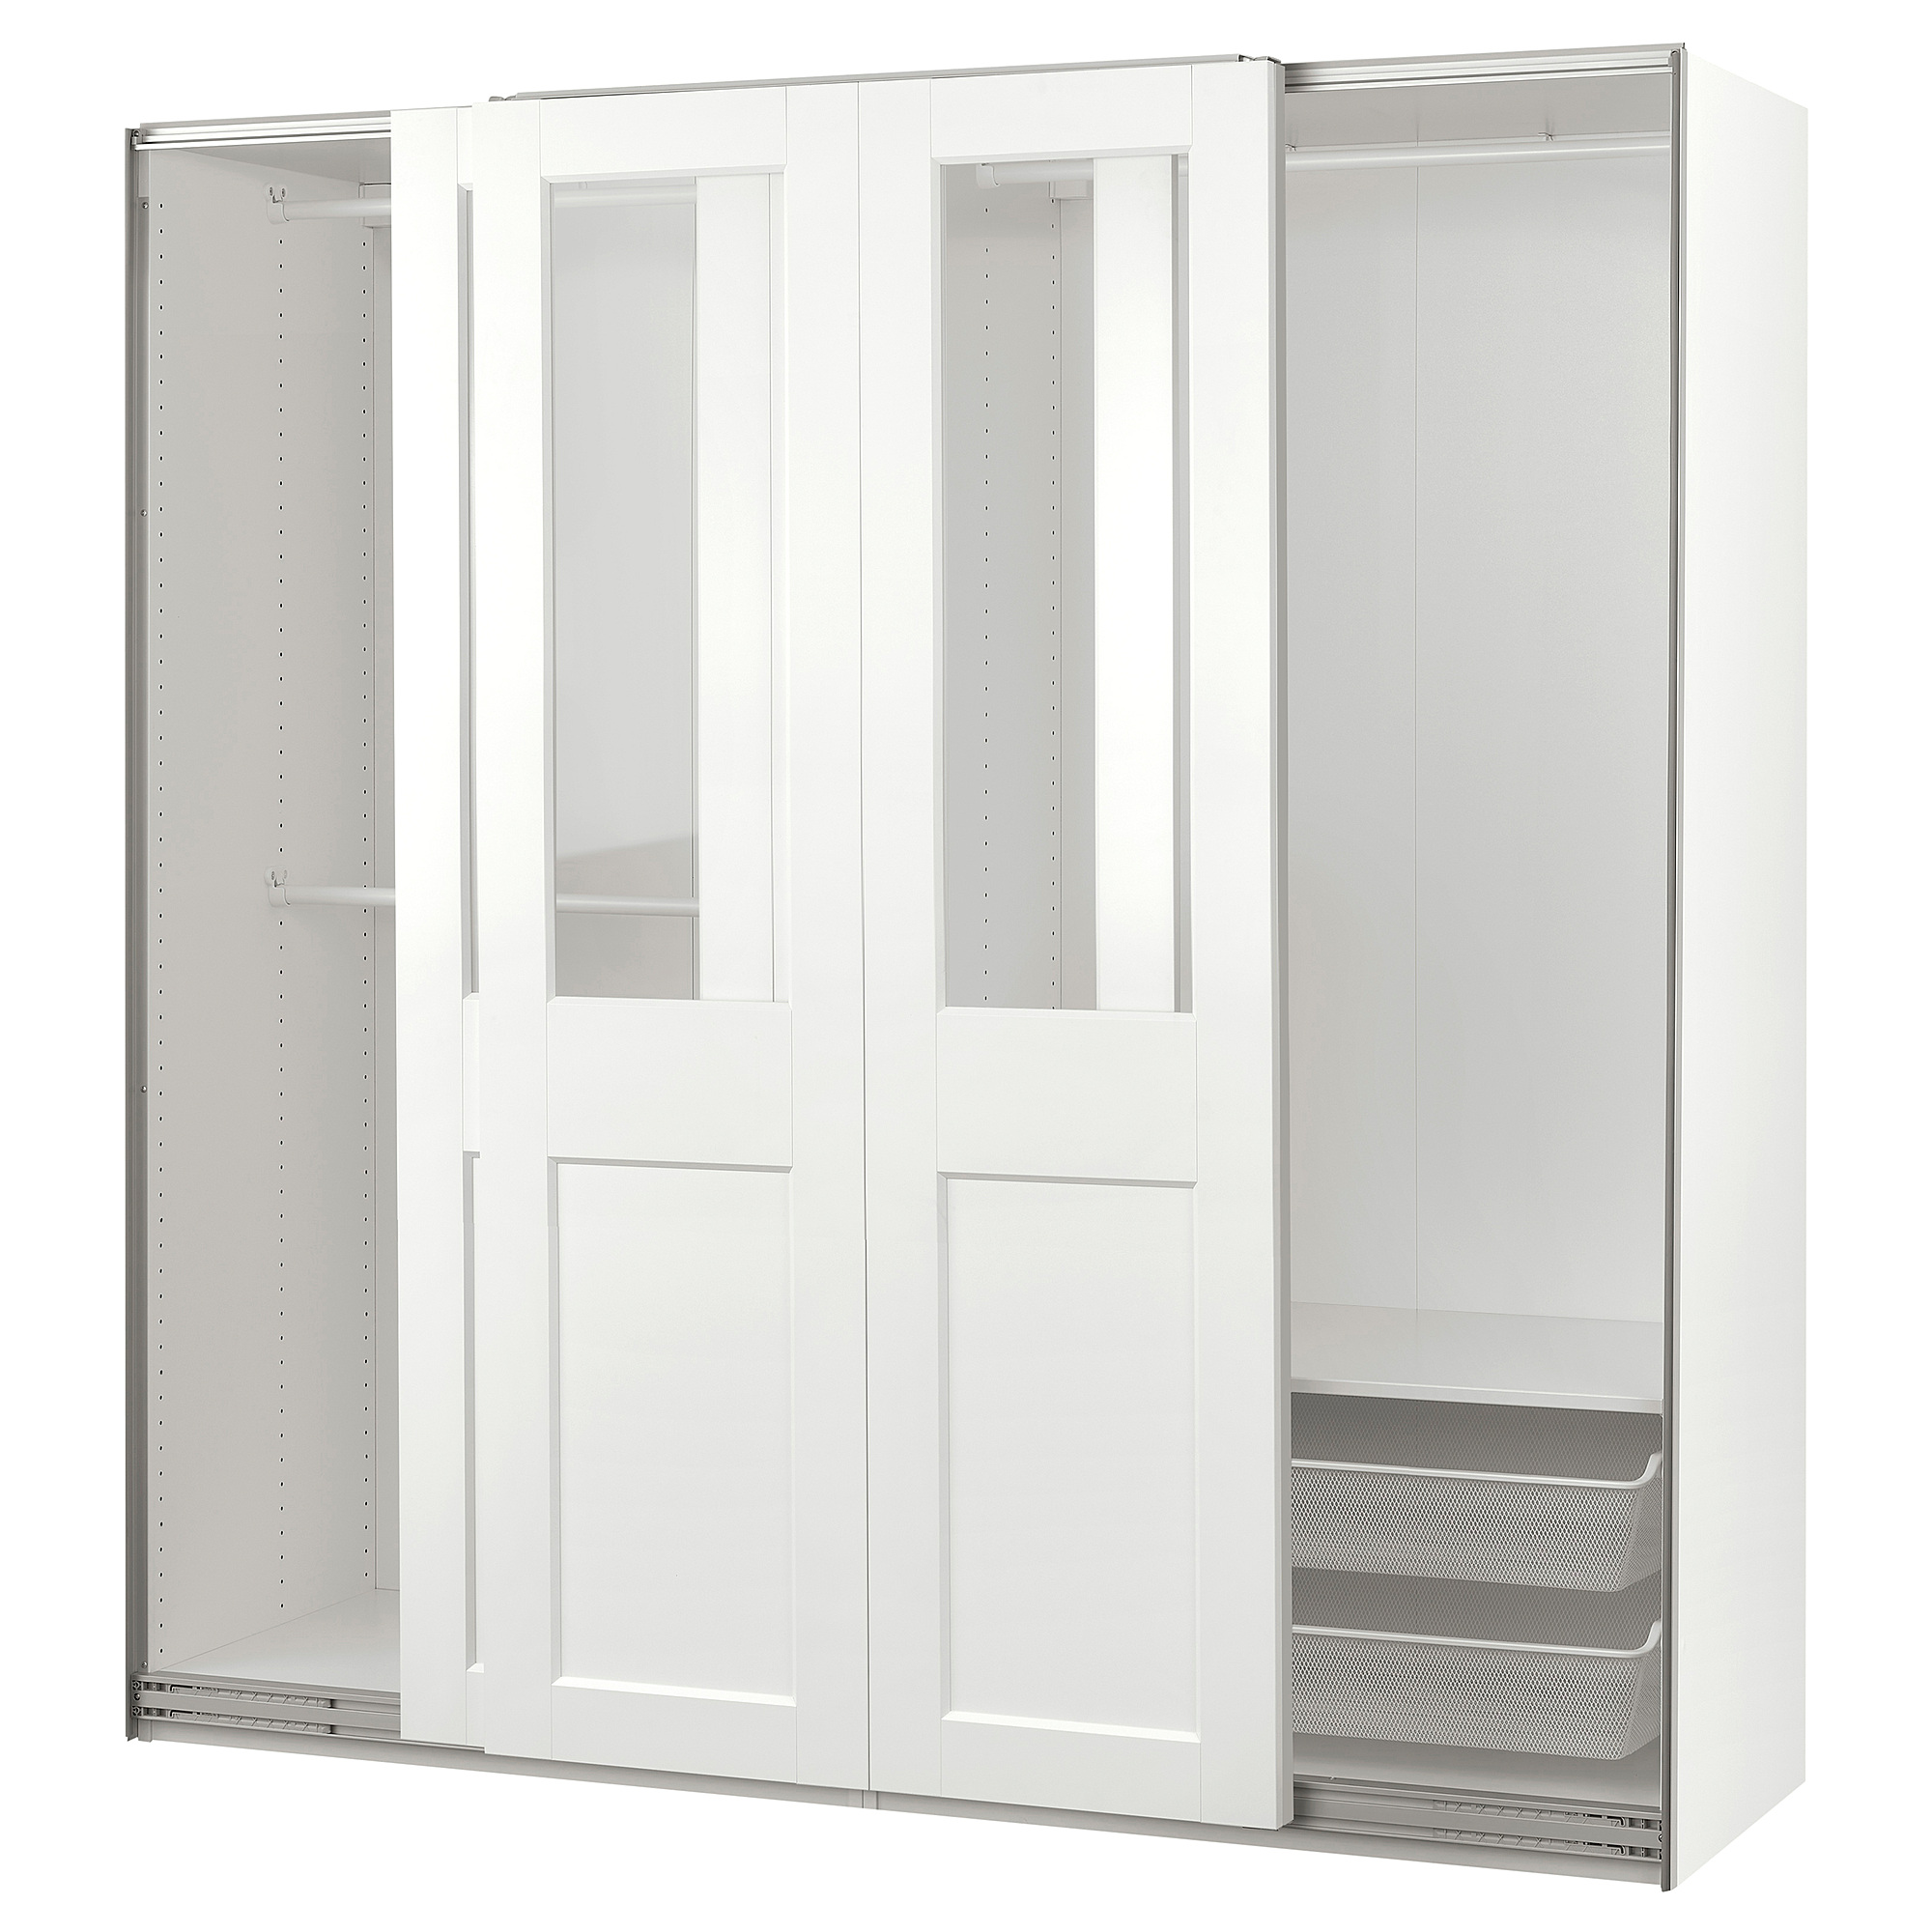 PAX/GRIMO wardrobe with sliding doors